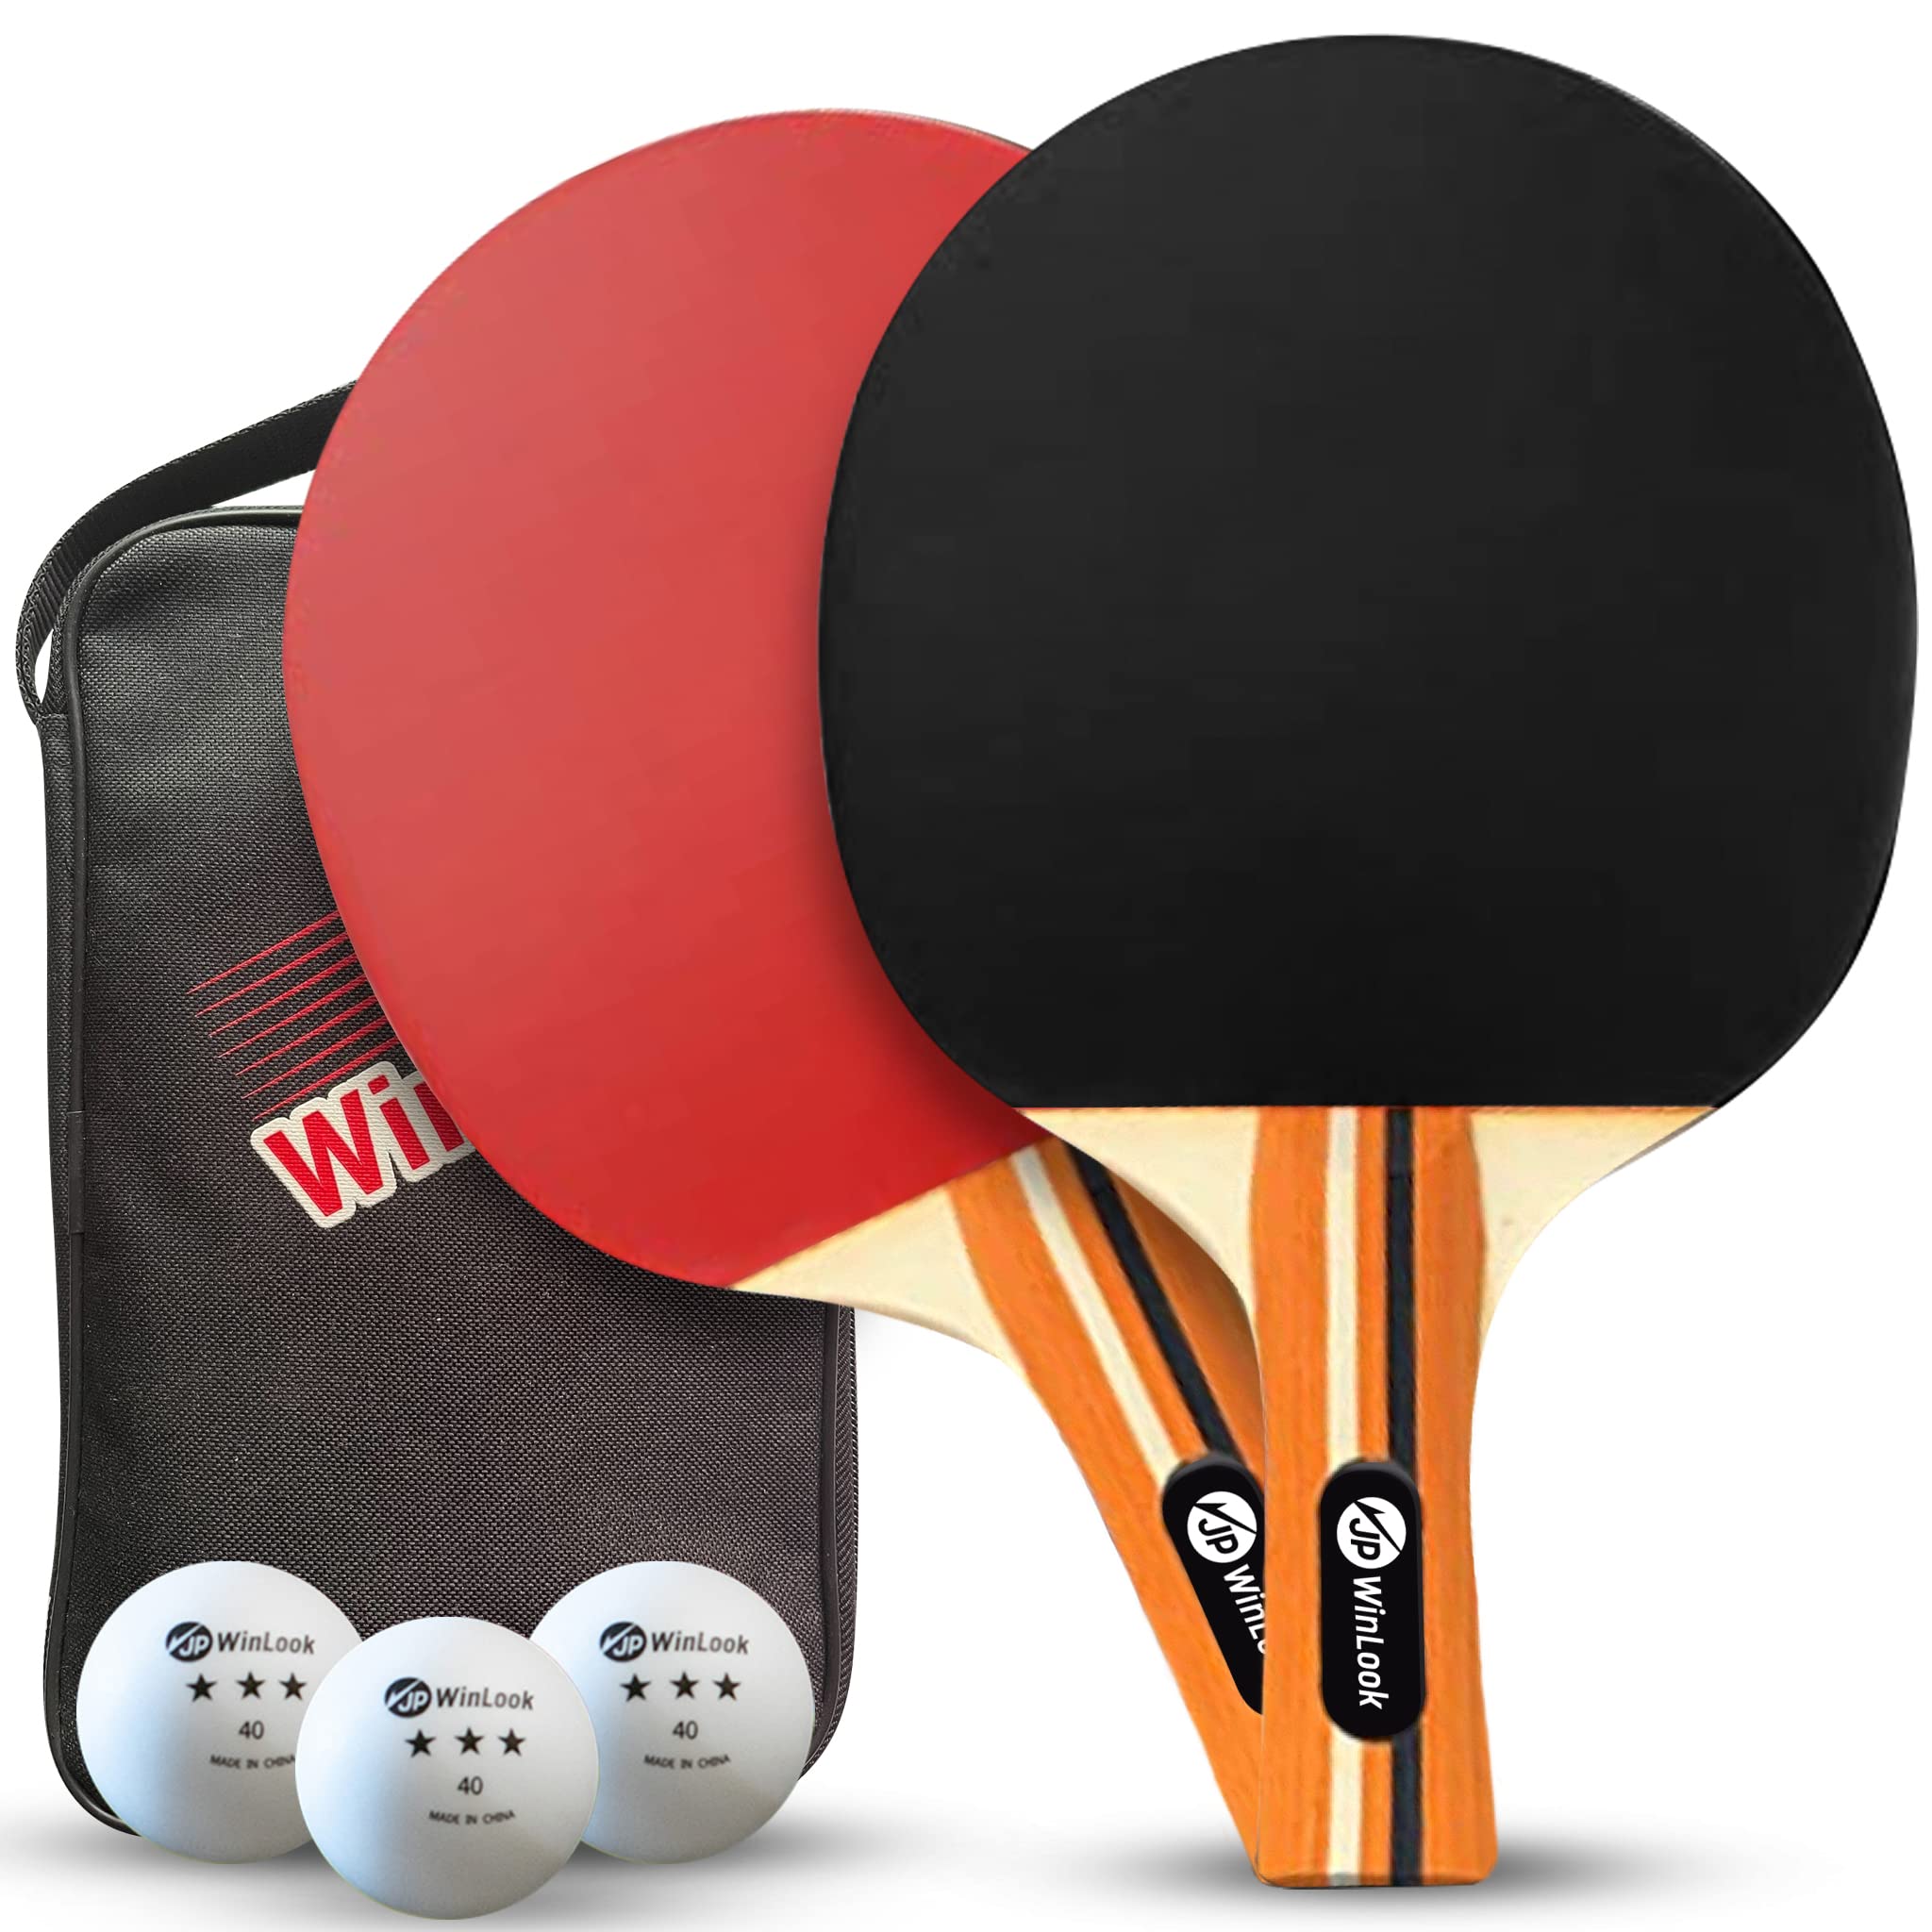 JP WinLook Ping Pong Paddles Set of 2 - Portable Table Tennis Paddle Set with Ping Pong Paddle Case & 3 Ping Pong Balls. Premium